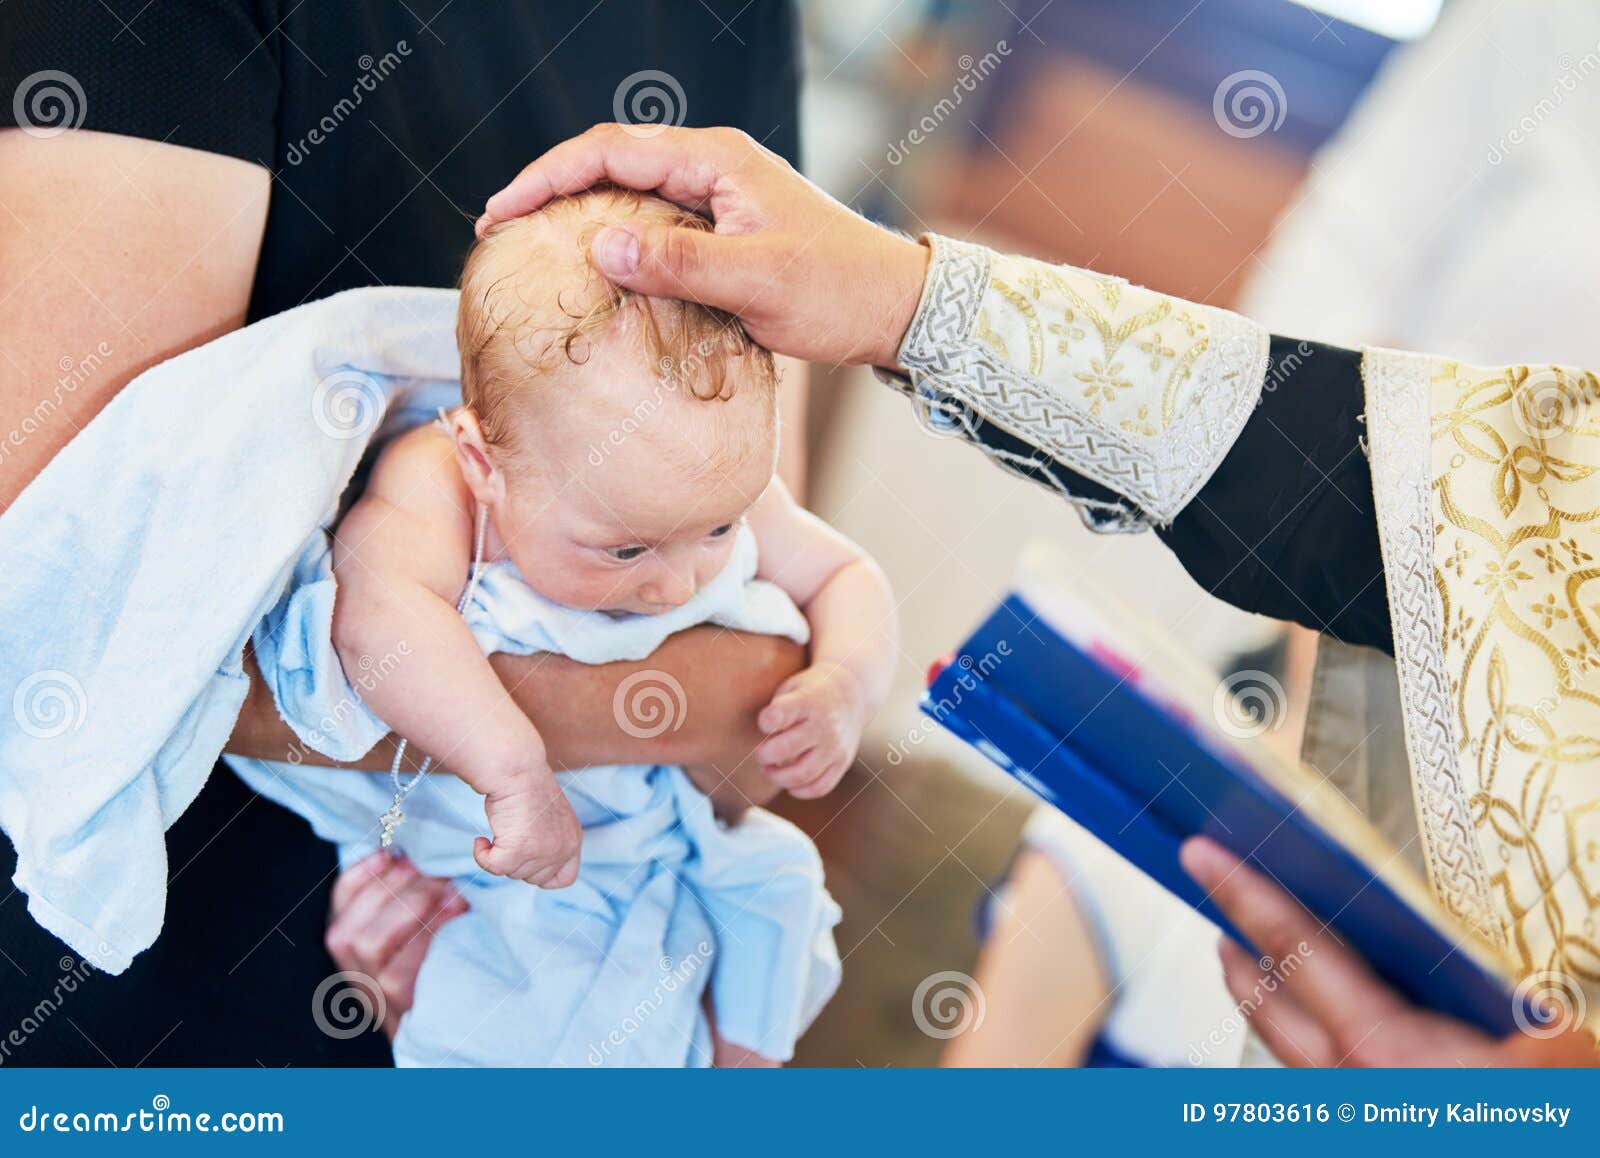 newborn presentation at church